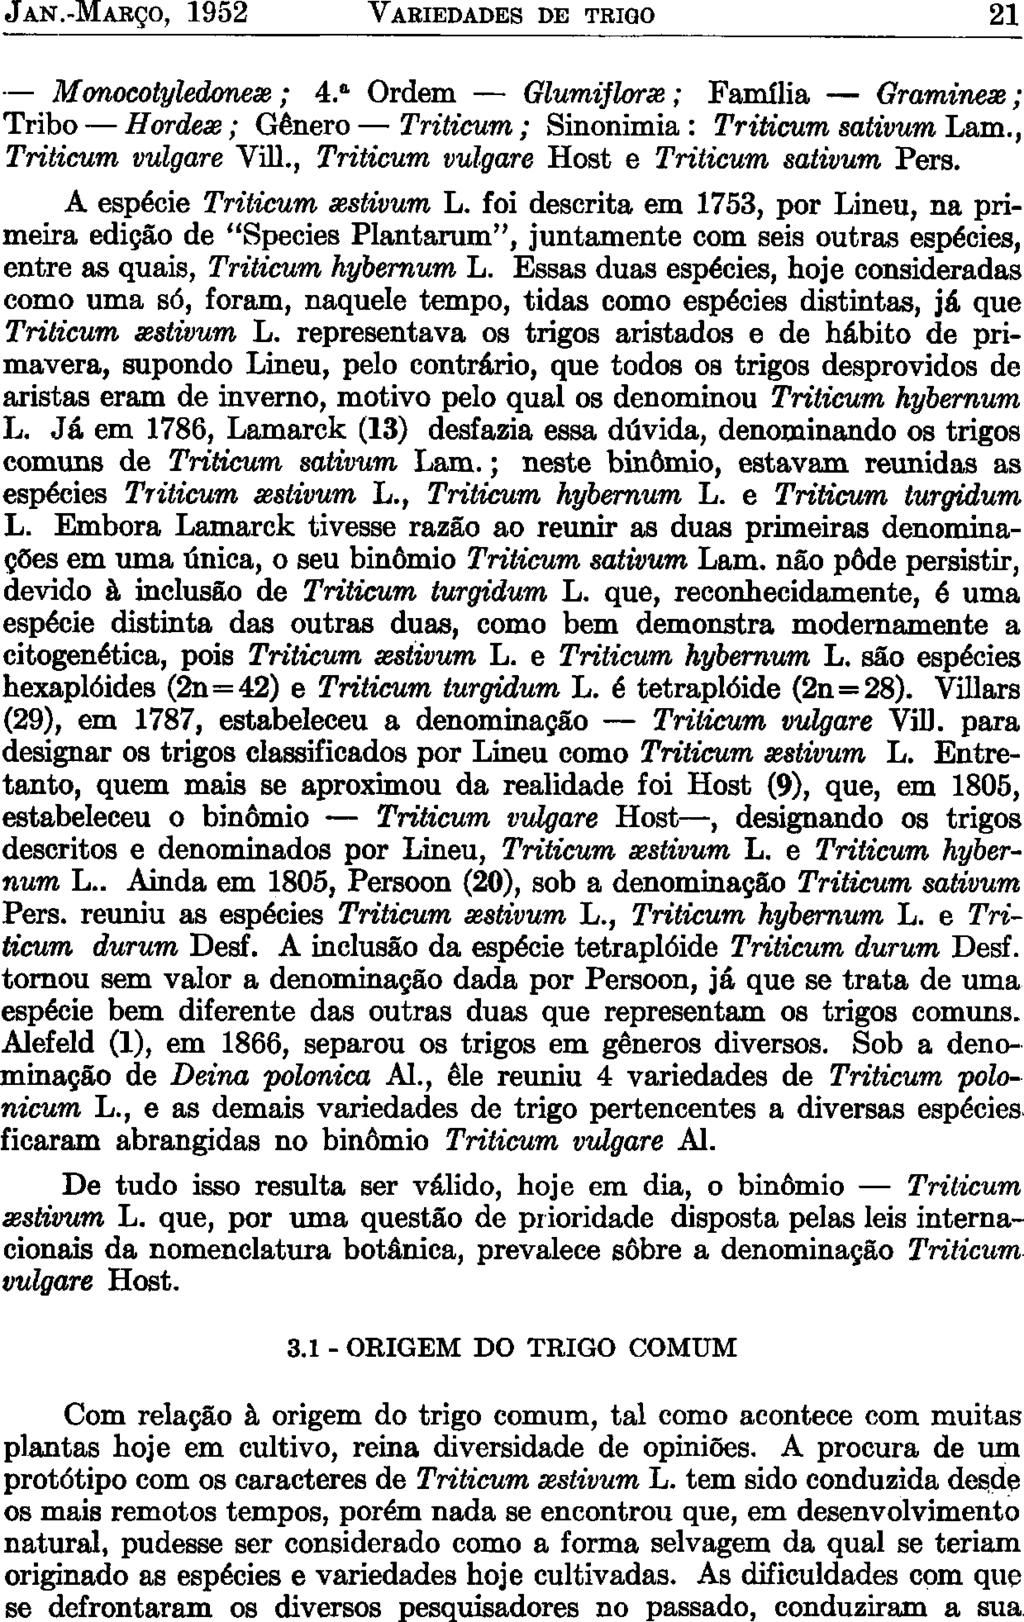 JAN.-MARÇO, 1952 VARIEDADES DE TRIGO 21 Monocotyledonese; 4. a Ordem Glumijlorse; Família Graminese; Tribo Hordese; Gênero Triticum; Sinonímia: Triticum sativum Lam., Triticum vulgare Vill.